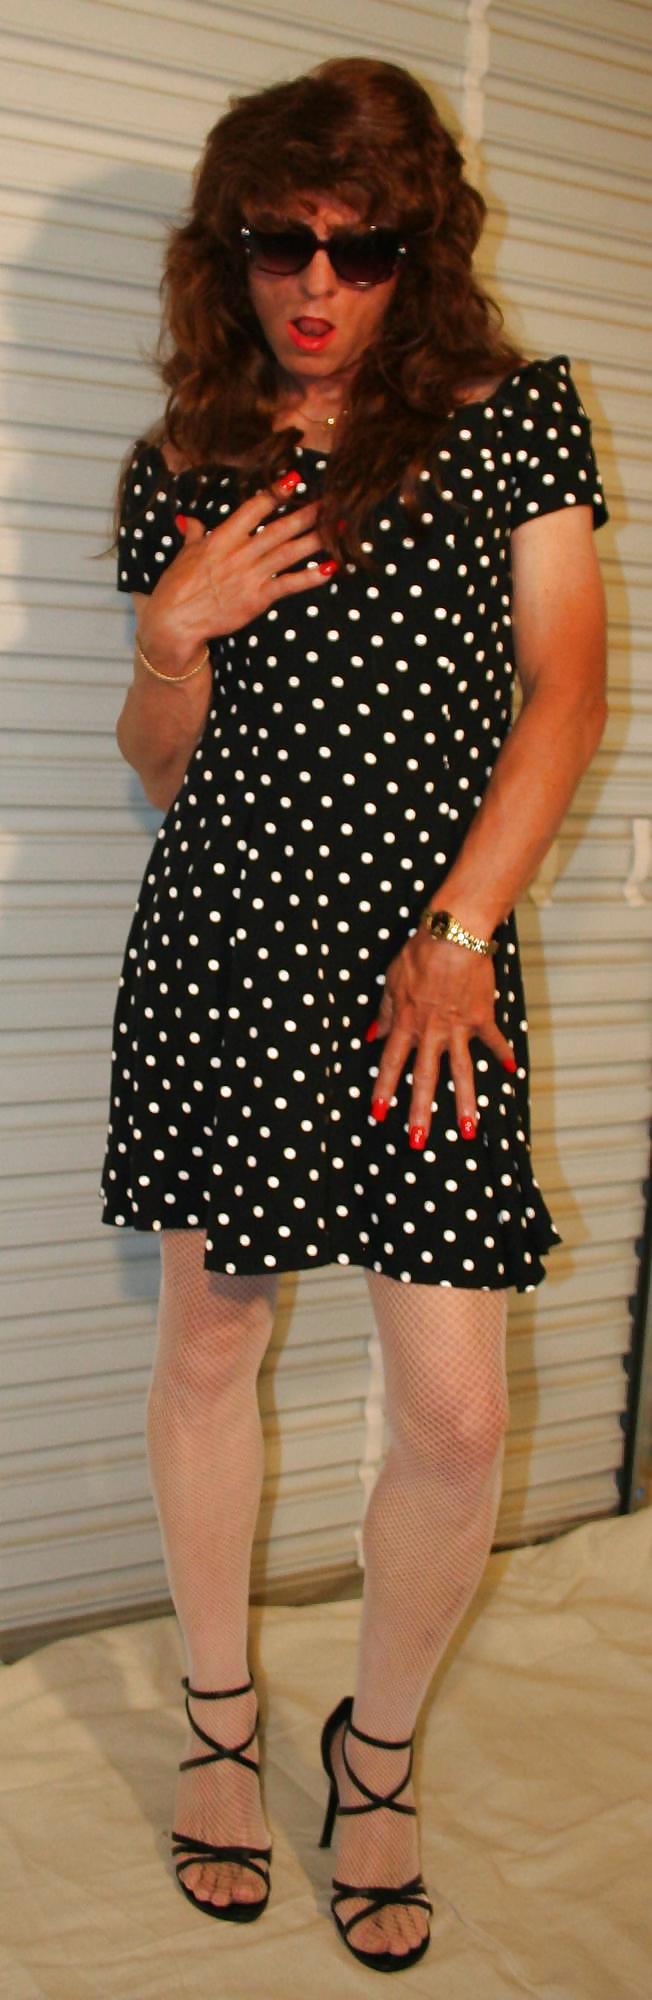 Brianna in a black and white polka dot dress. #21052612